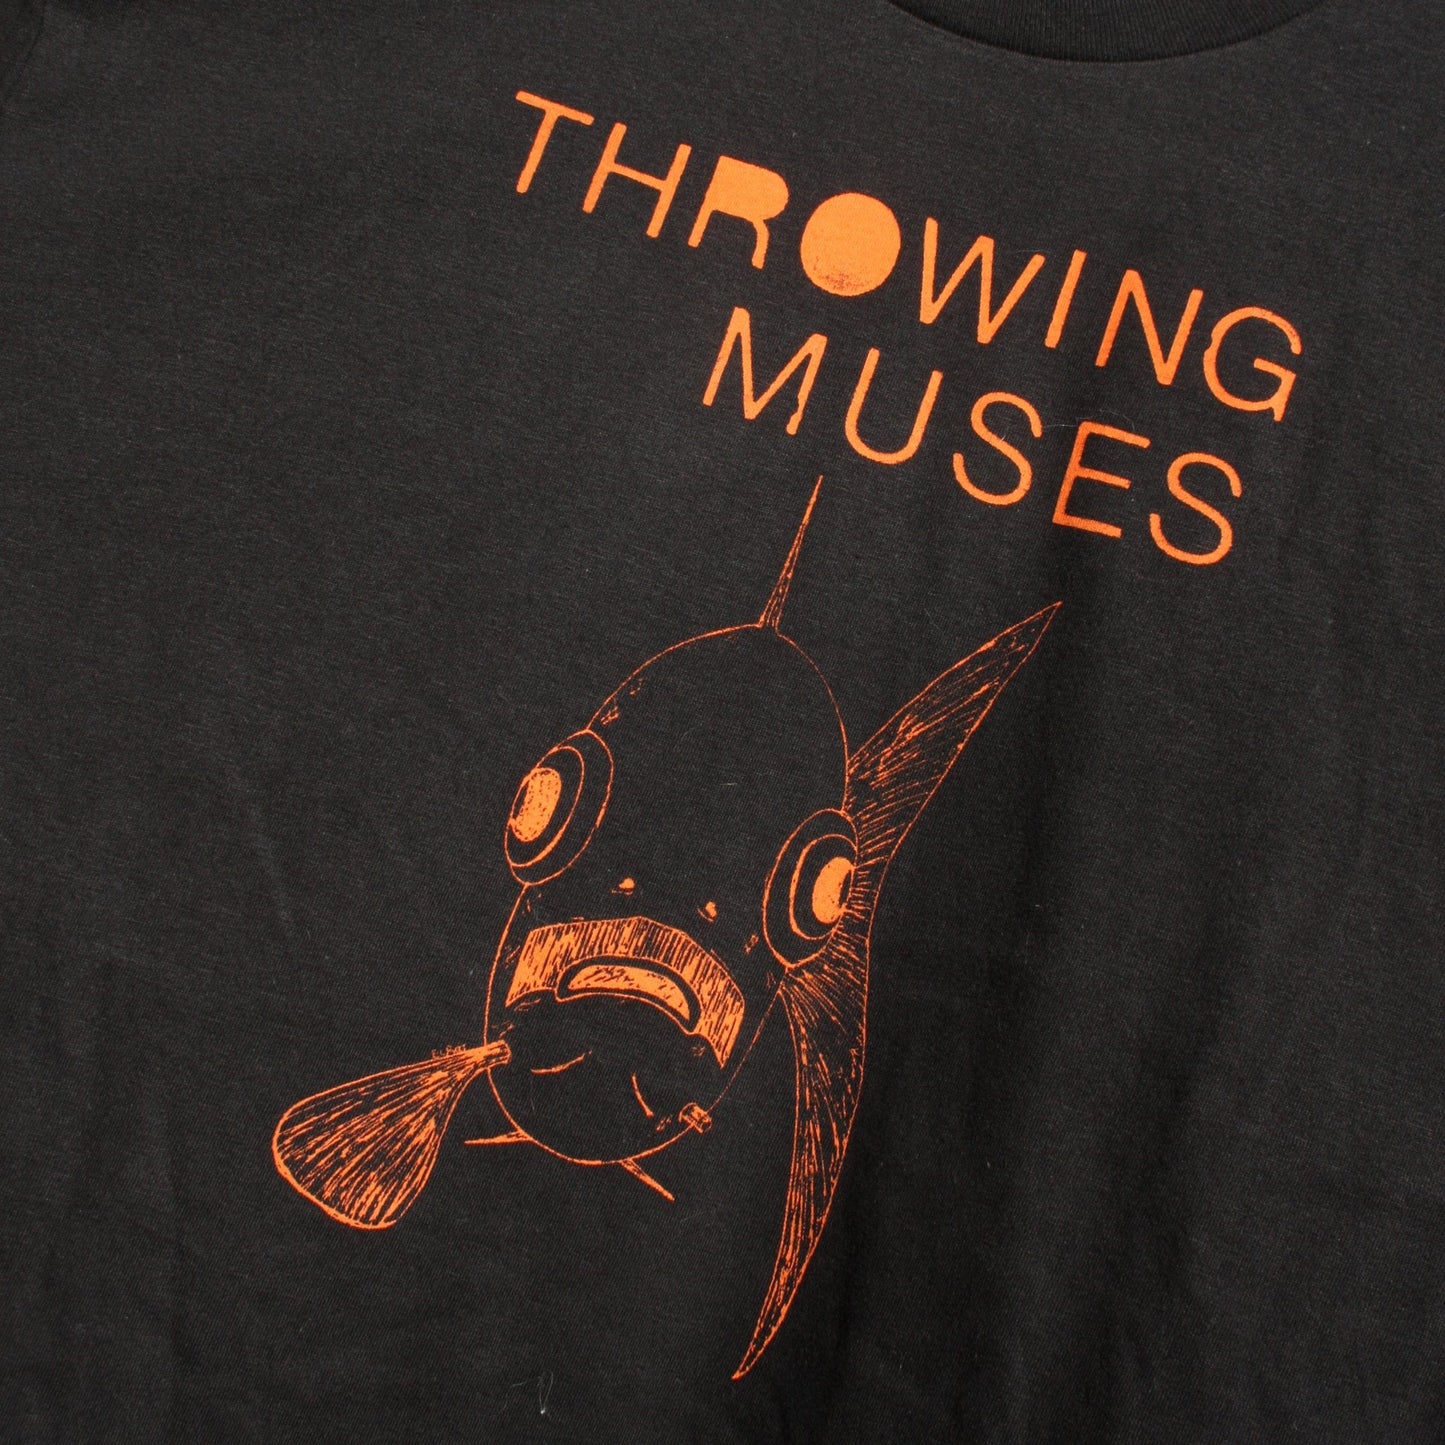 Throwing Muses 'Bywater' fish tee - Black T-Shirt with Orange print - ElRat/Hersh - ElRatDesigns - T Shirt